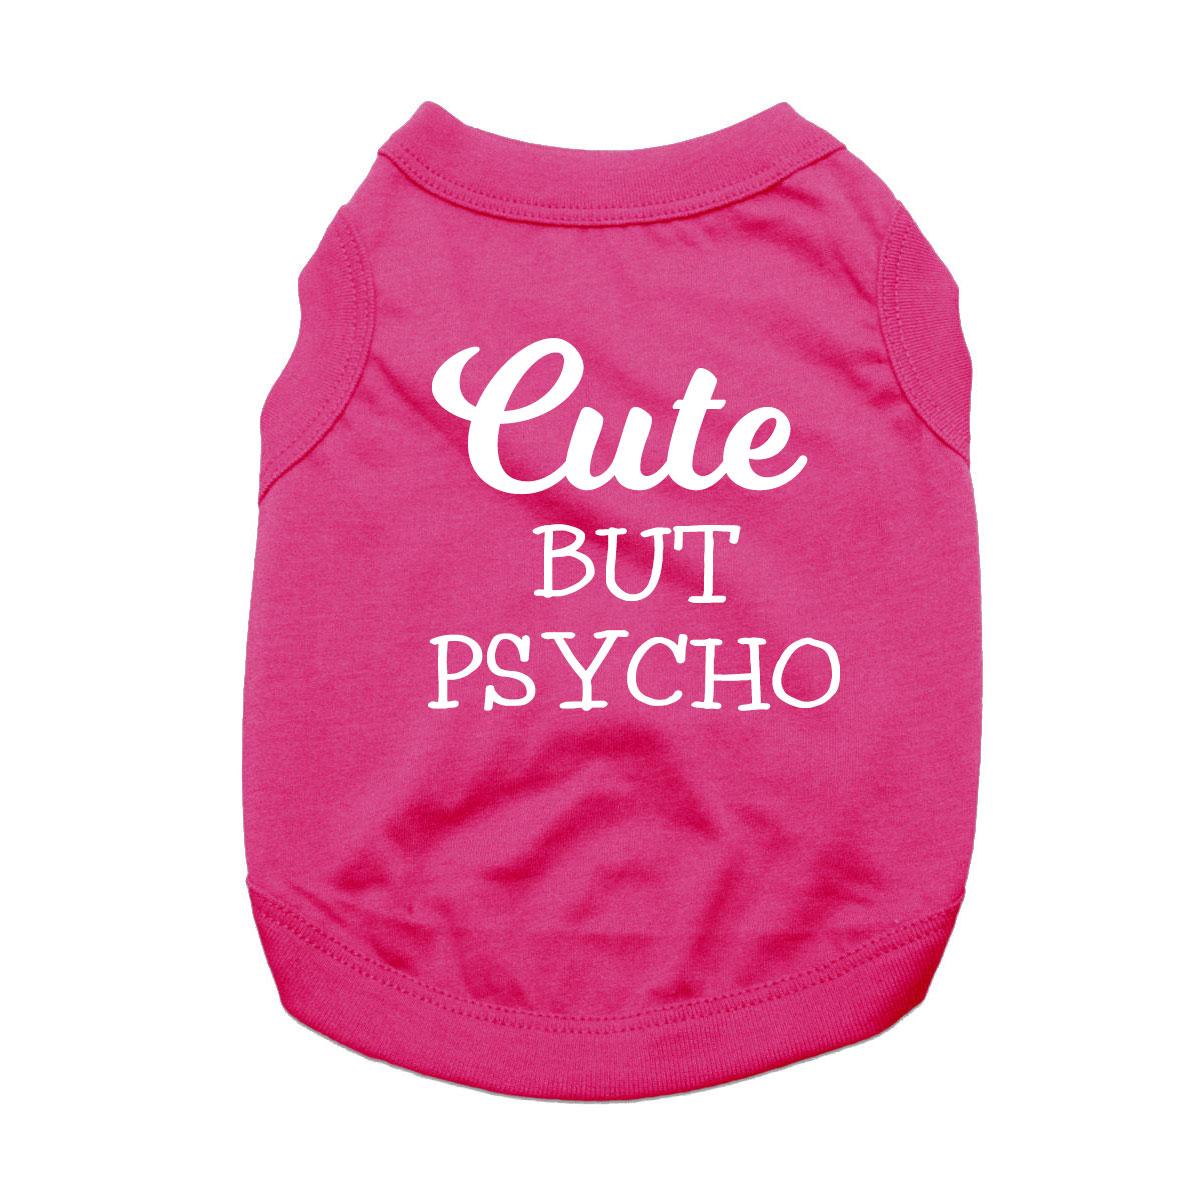 Cute But Psycho Dog Shirt - Bright Pink